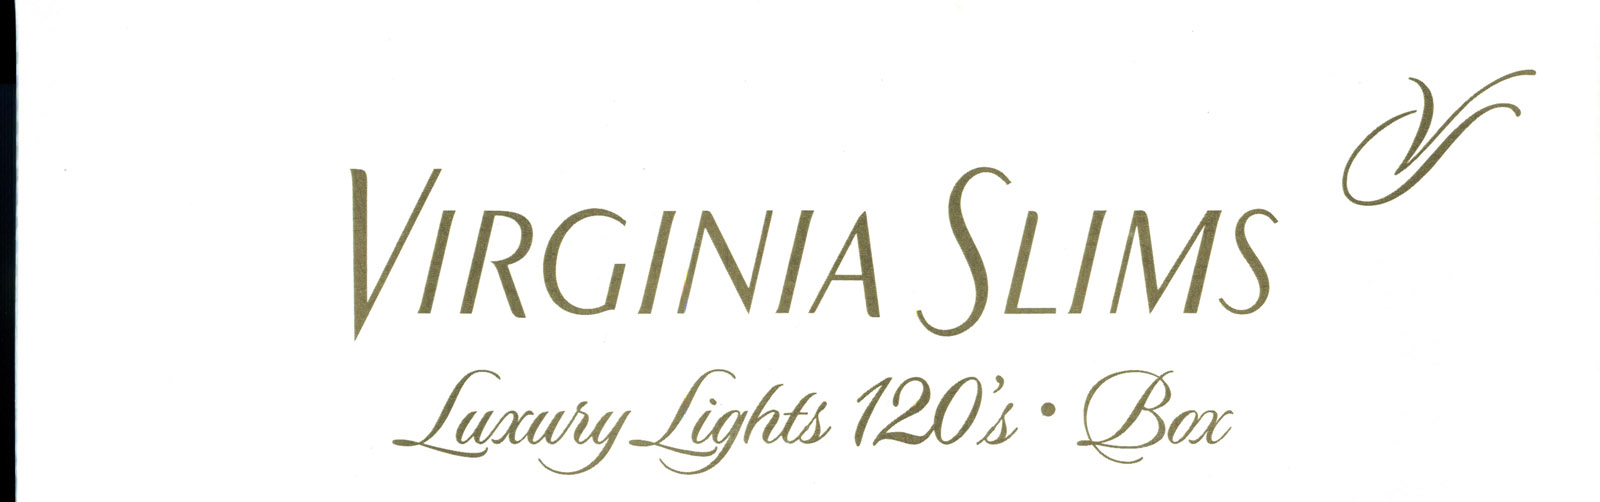 Virginia Slims Brand Logo